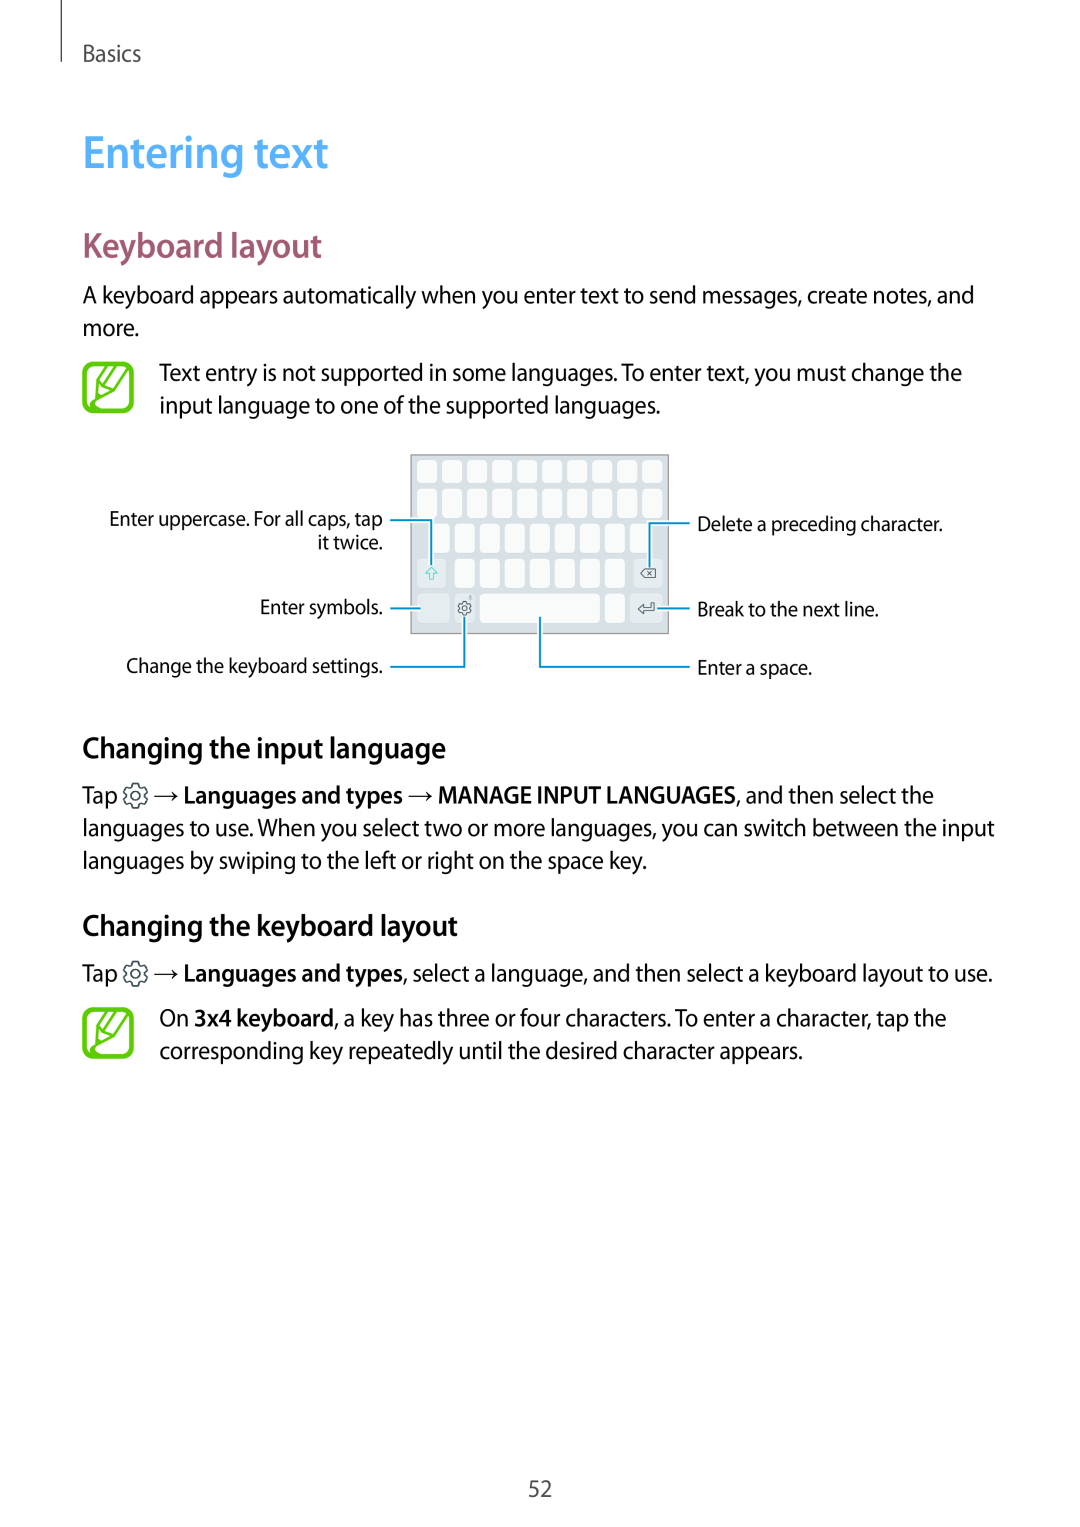 Samsung SM-A520FZIABGL Entering text, Keyboard layout, Changing the input language, Changing the keyboard layout, Basics 